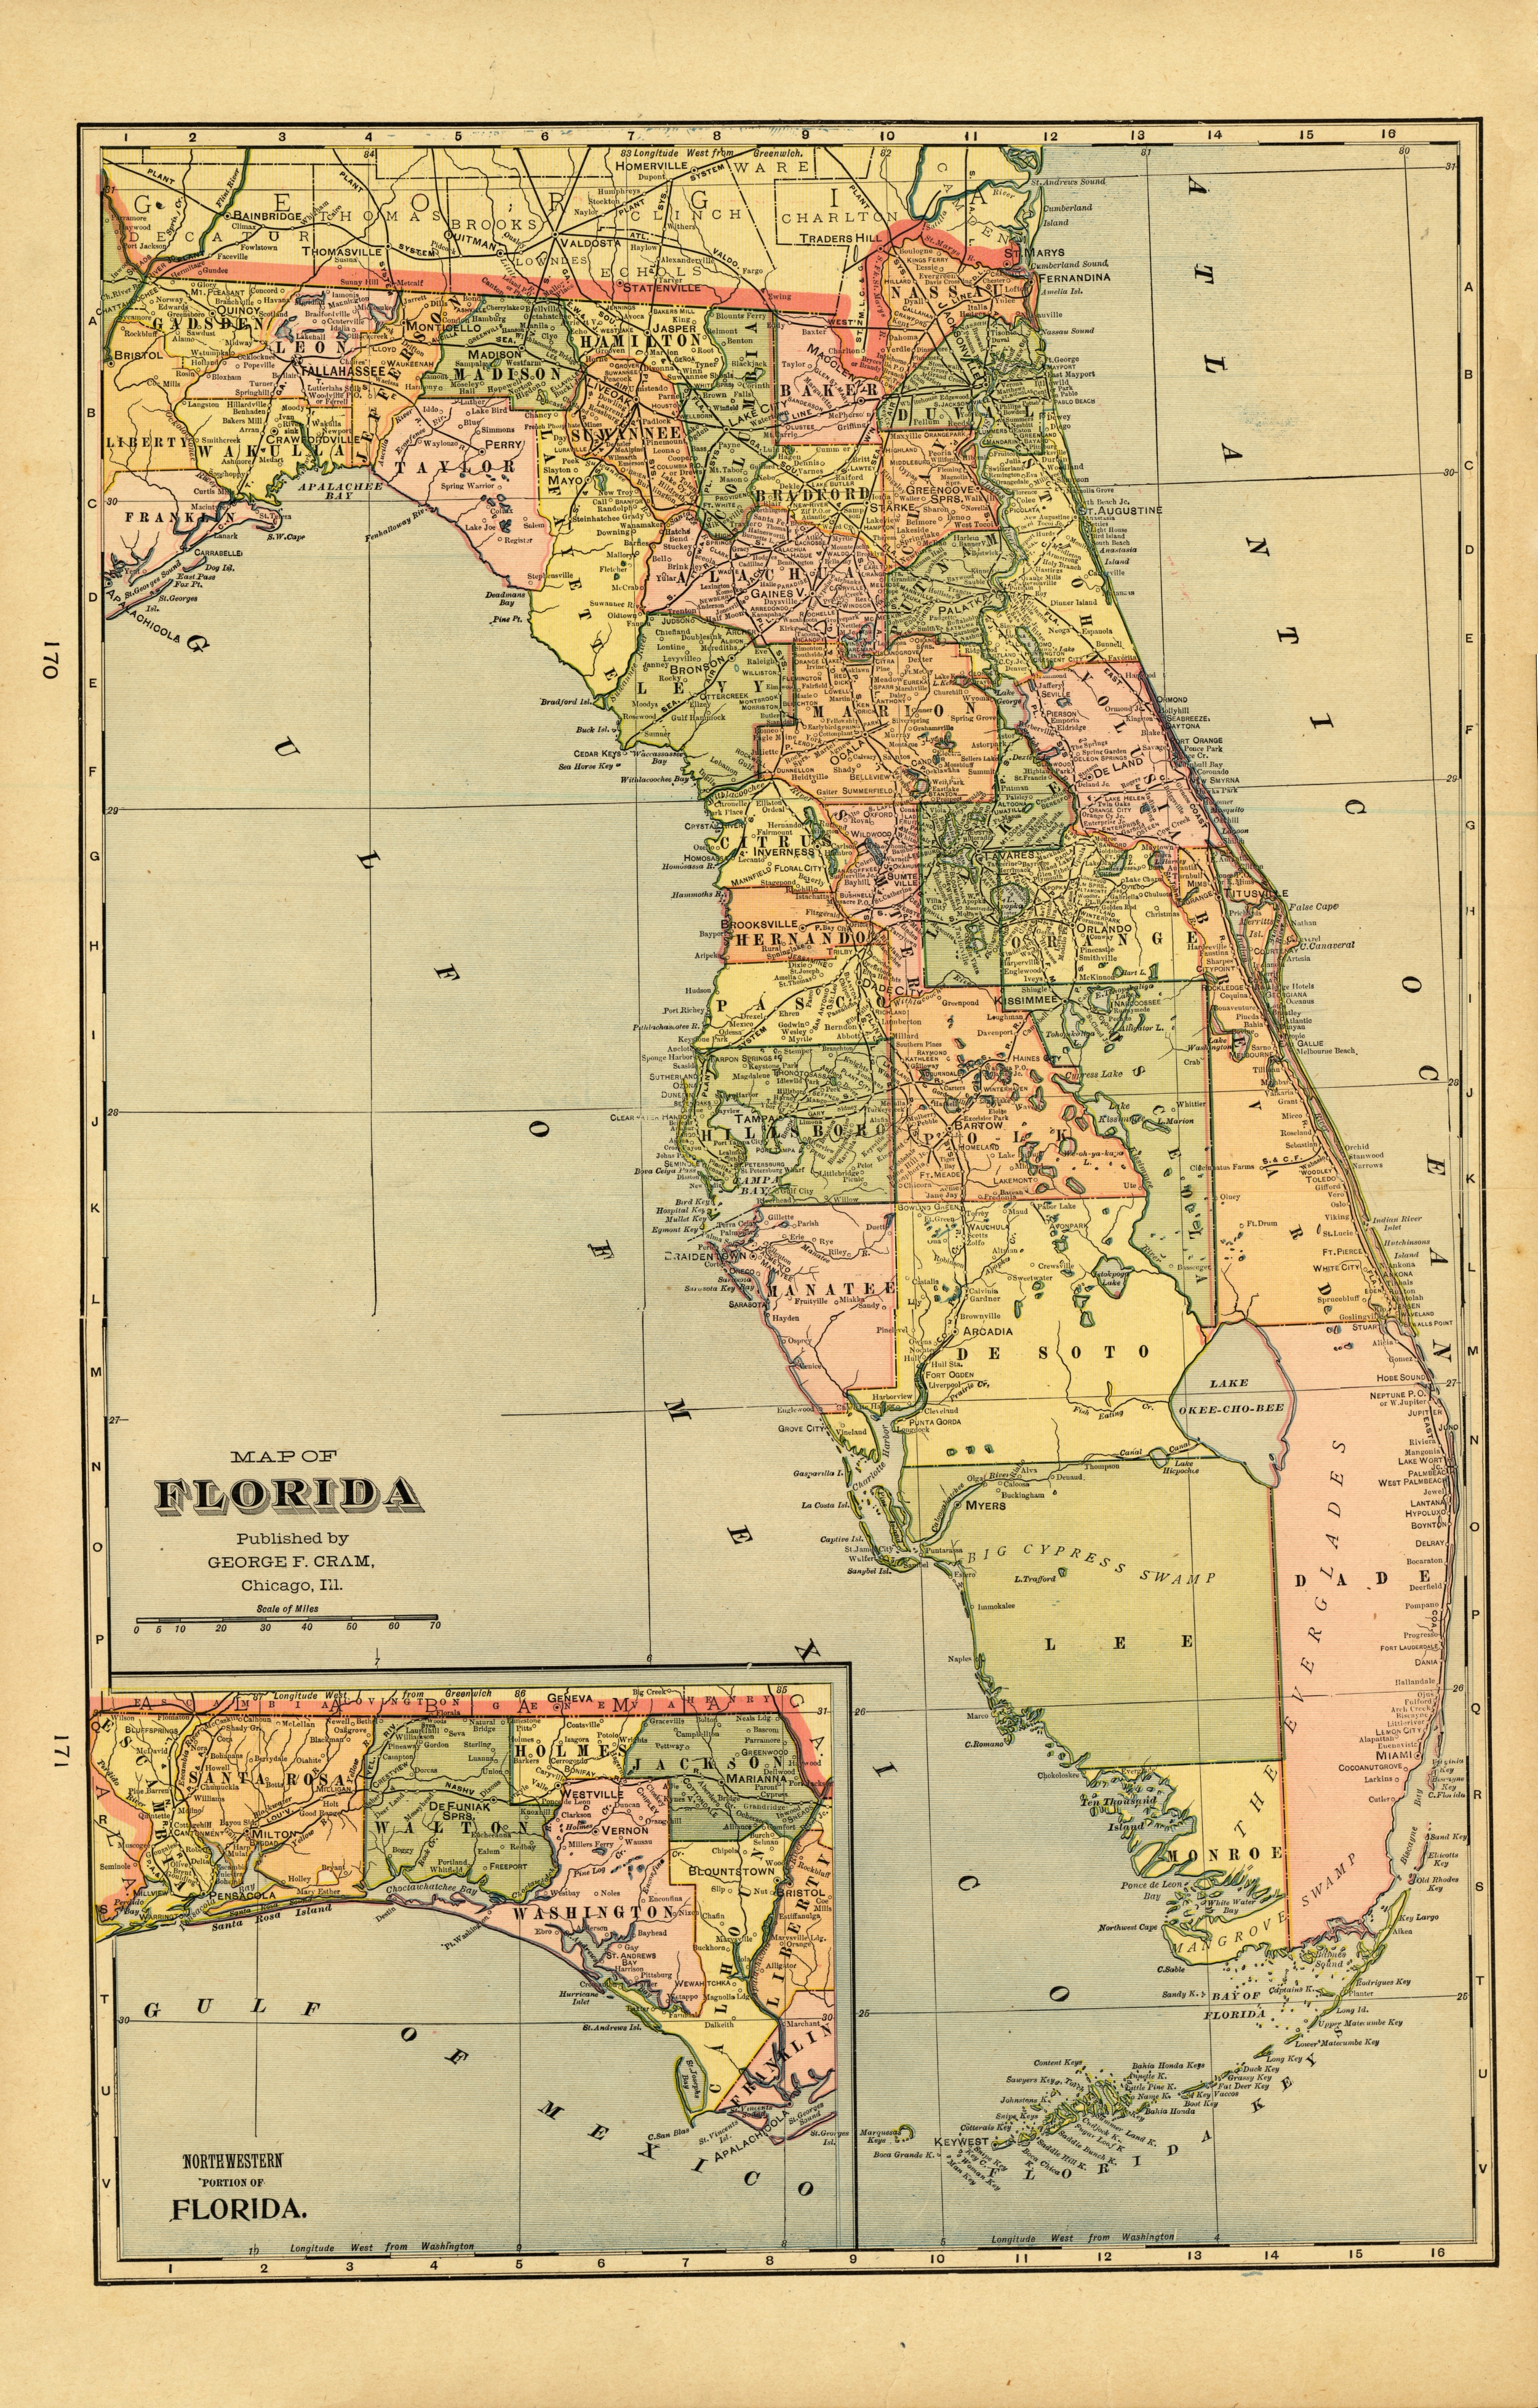 Cram's Florida, 1902